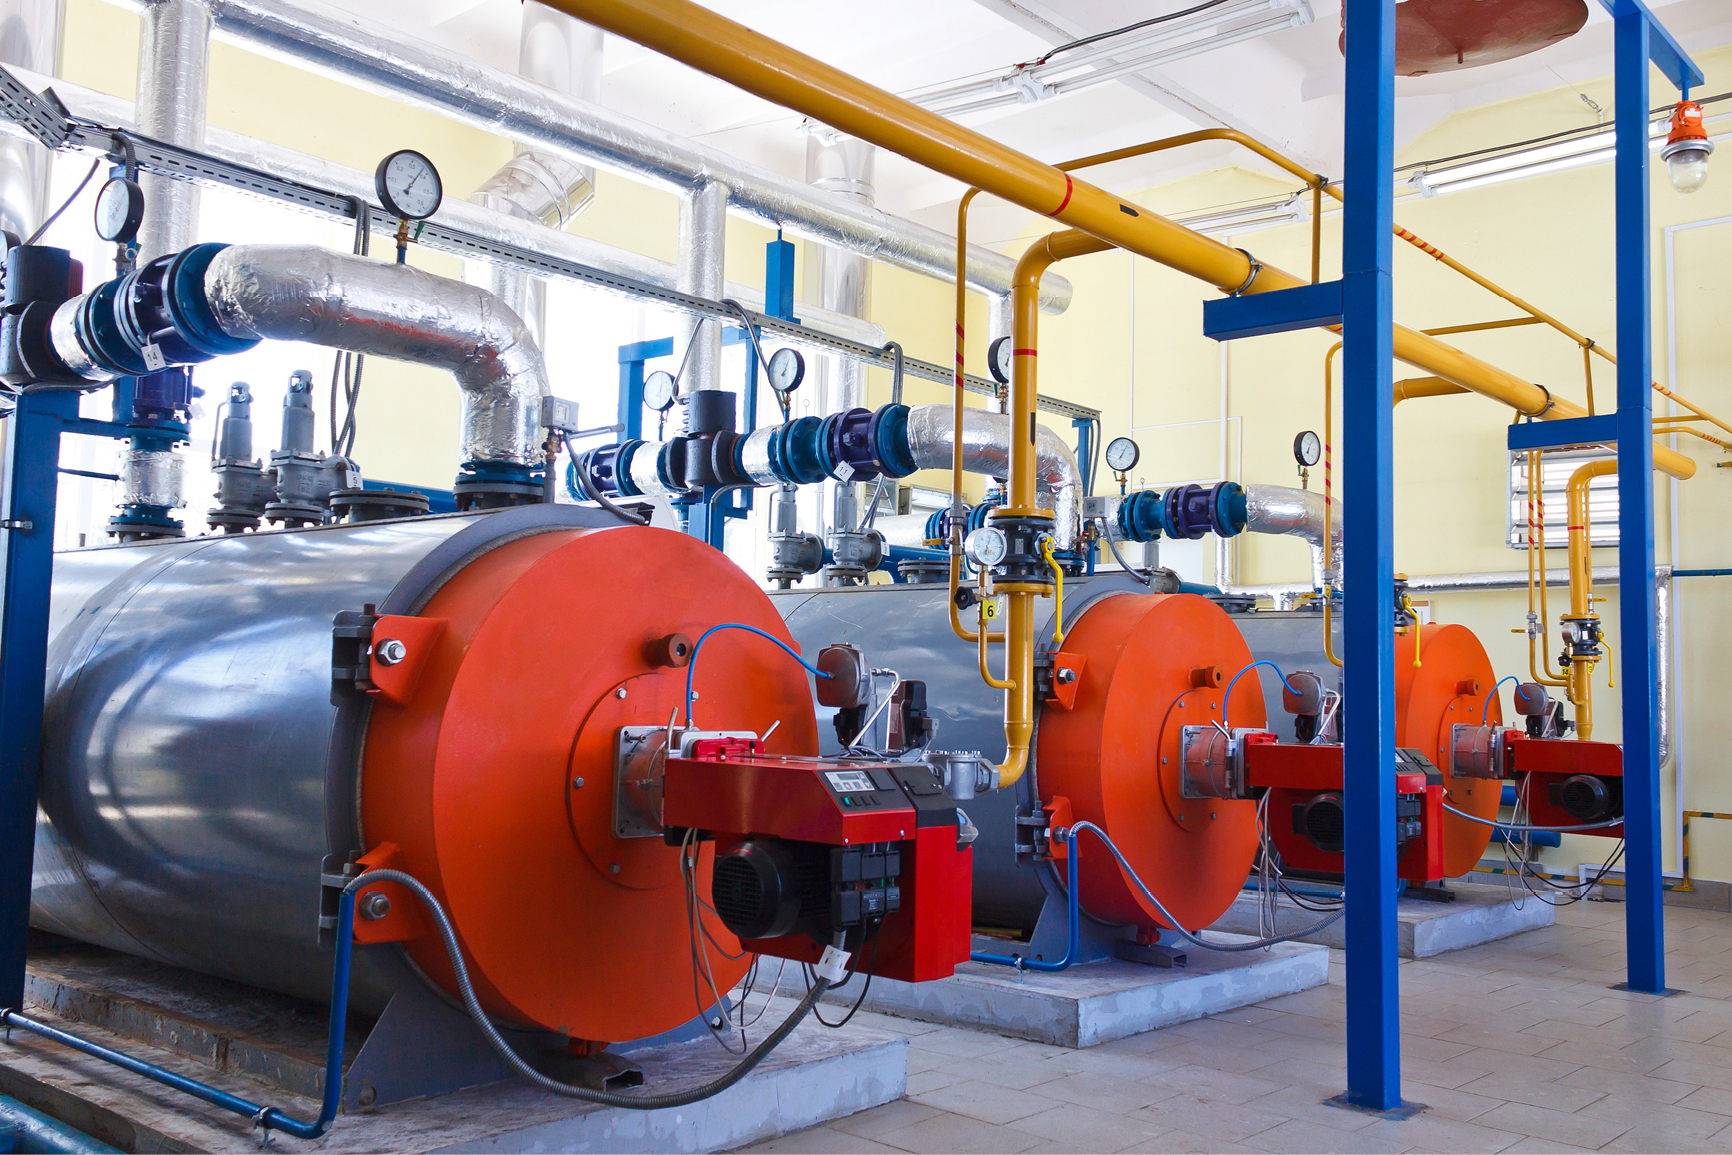 Tecs - Comprehensive building compliance services - Industrial & Commercial Steam Boilers